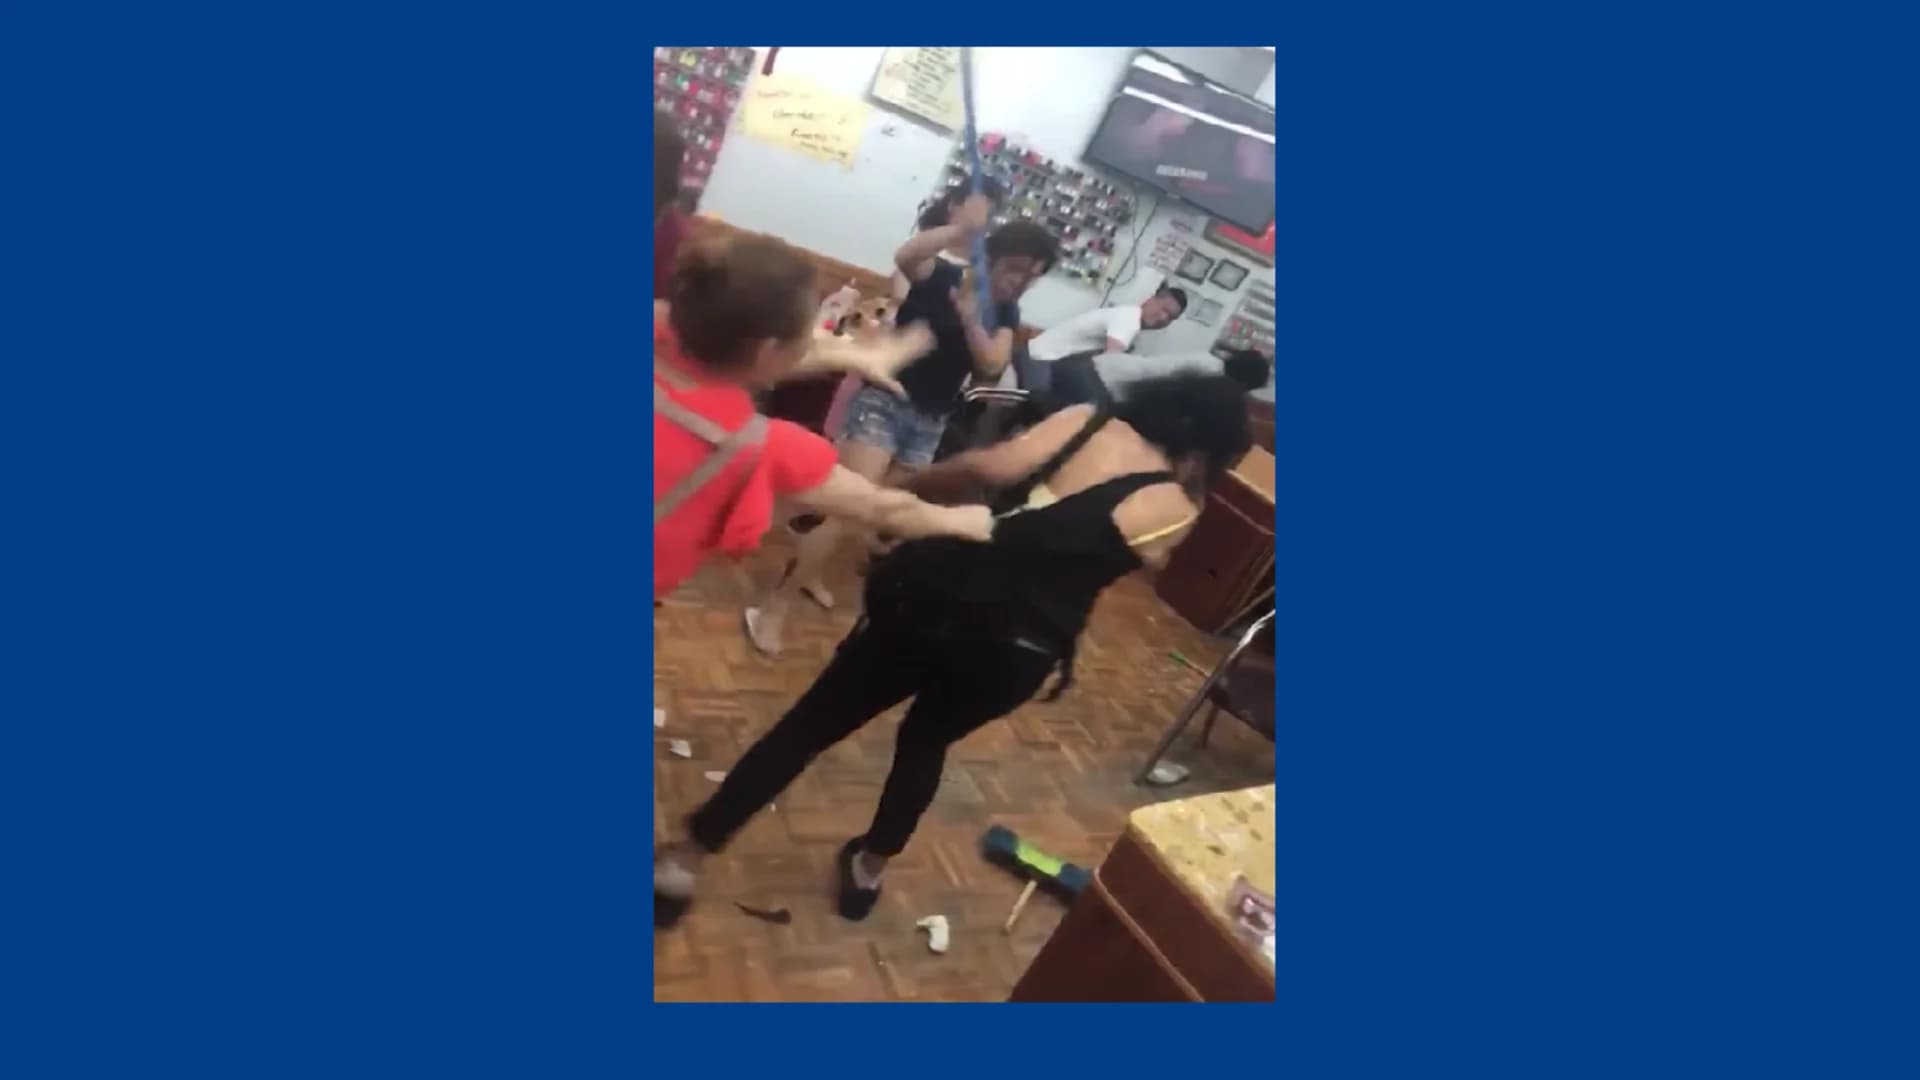 2 women charged in Brooklyn nail salon brawl